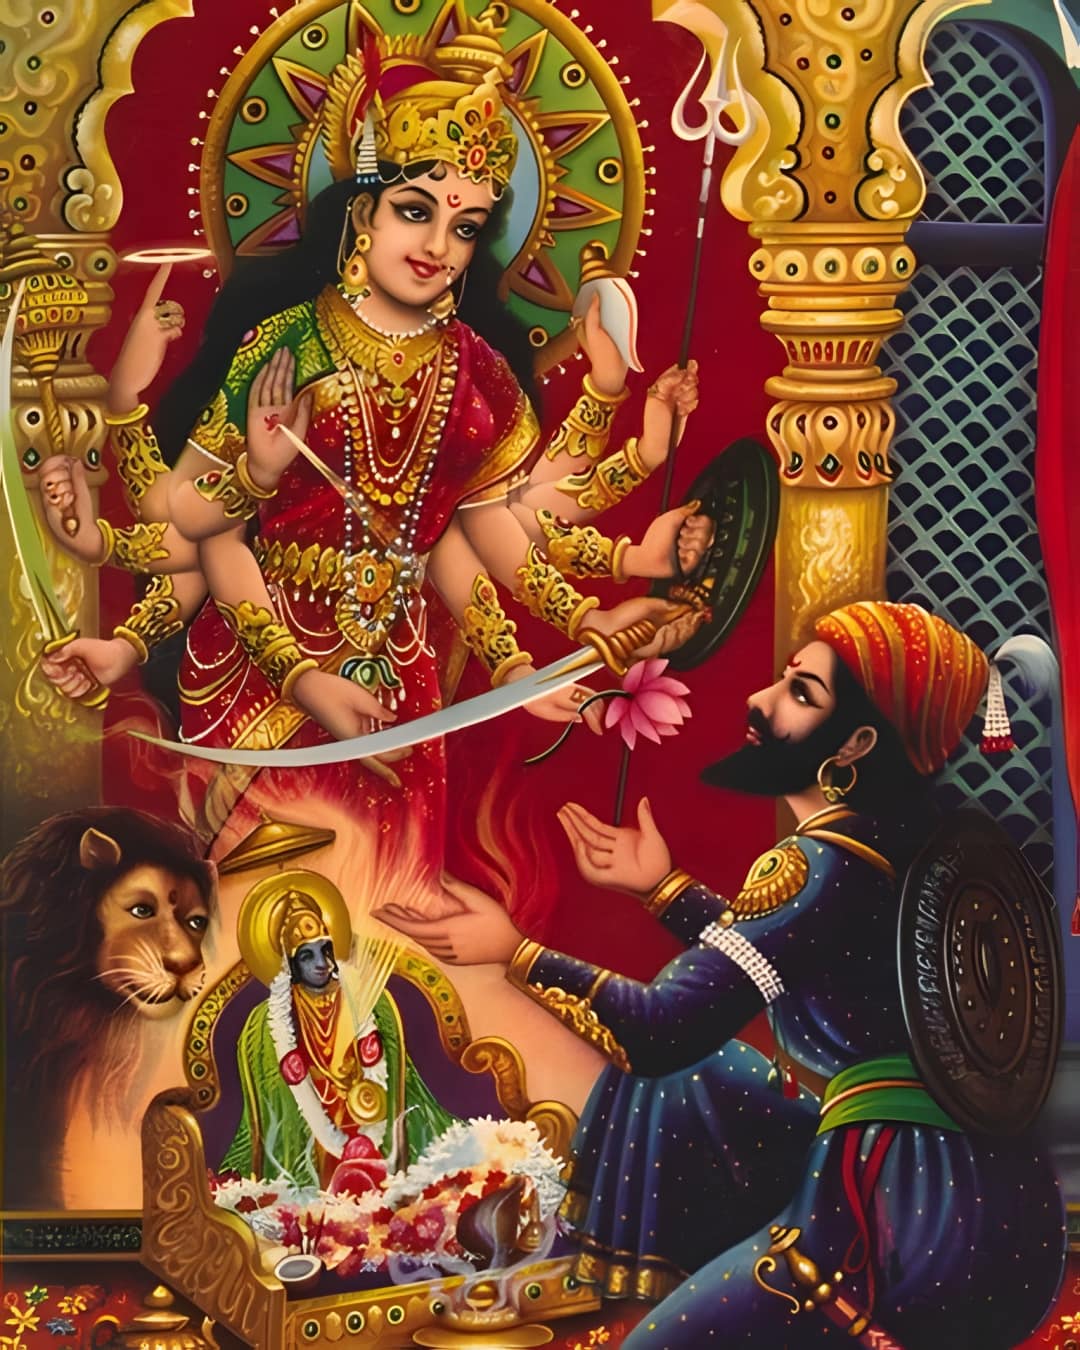 Imaginary painting depicting the Goddess Bhavani Devi giving sword to Shivaji Maharaj​